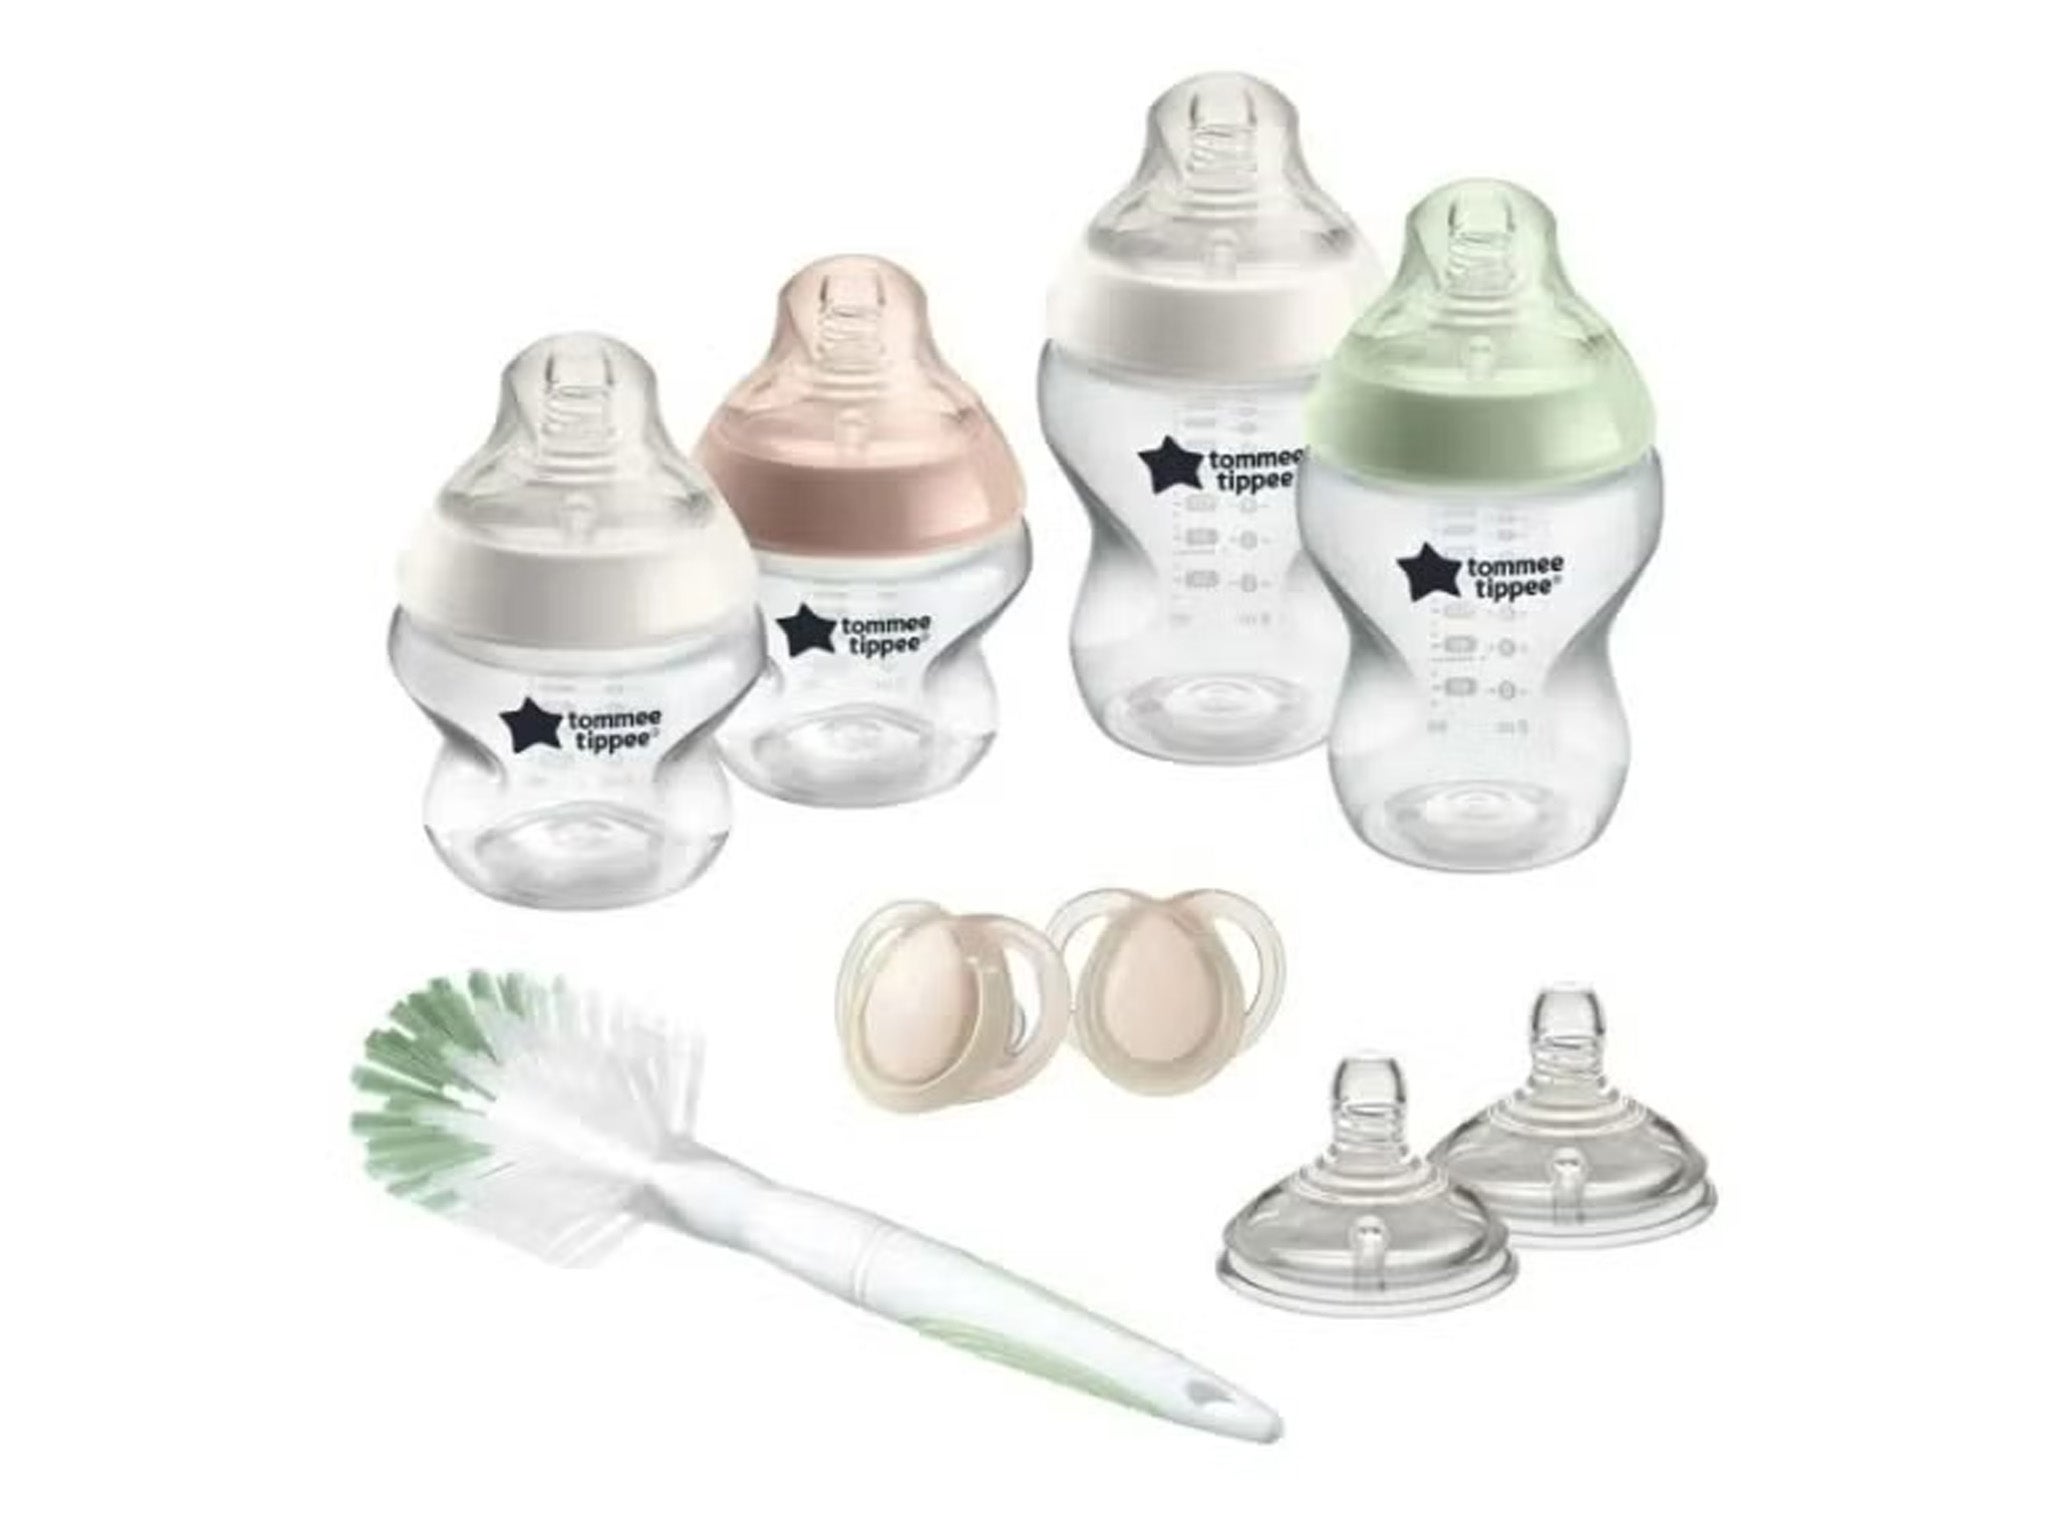 Tommee Tippee closer to nature newborn baby bottle starter set